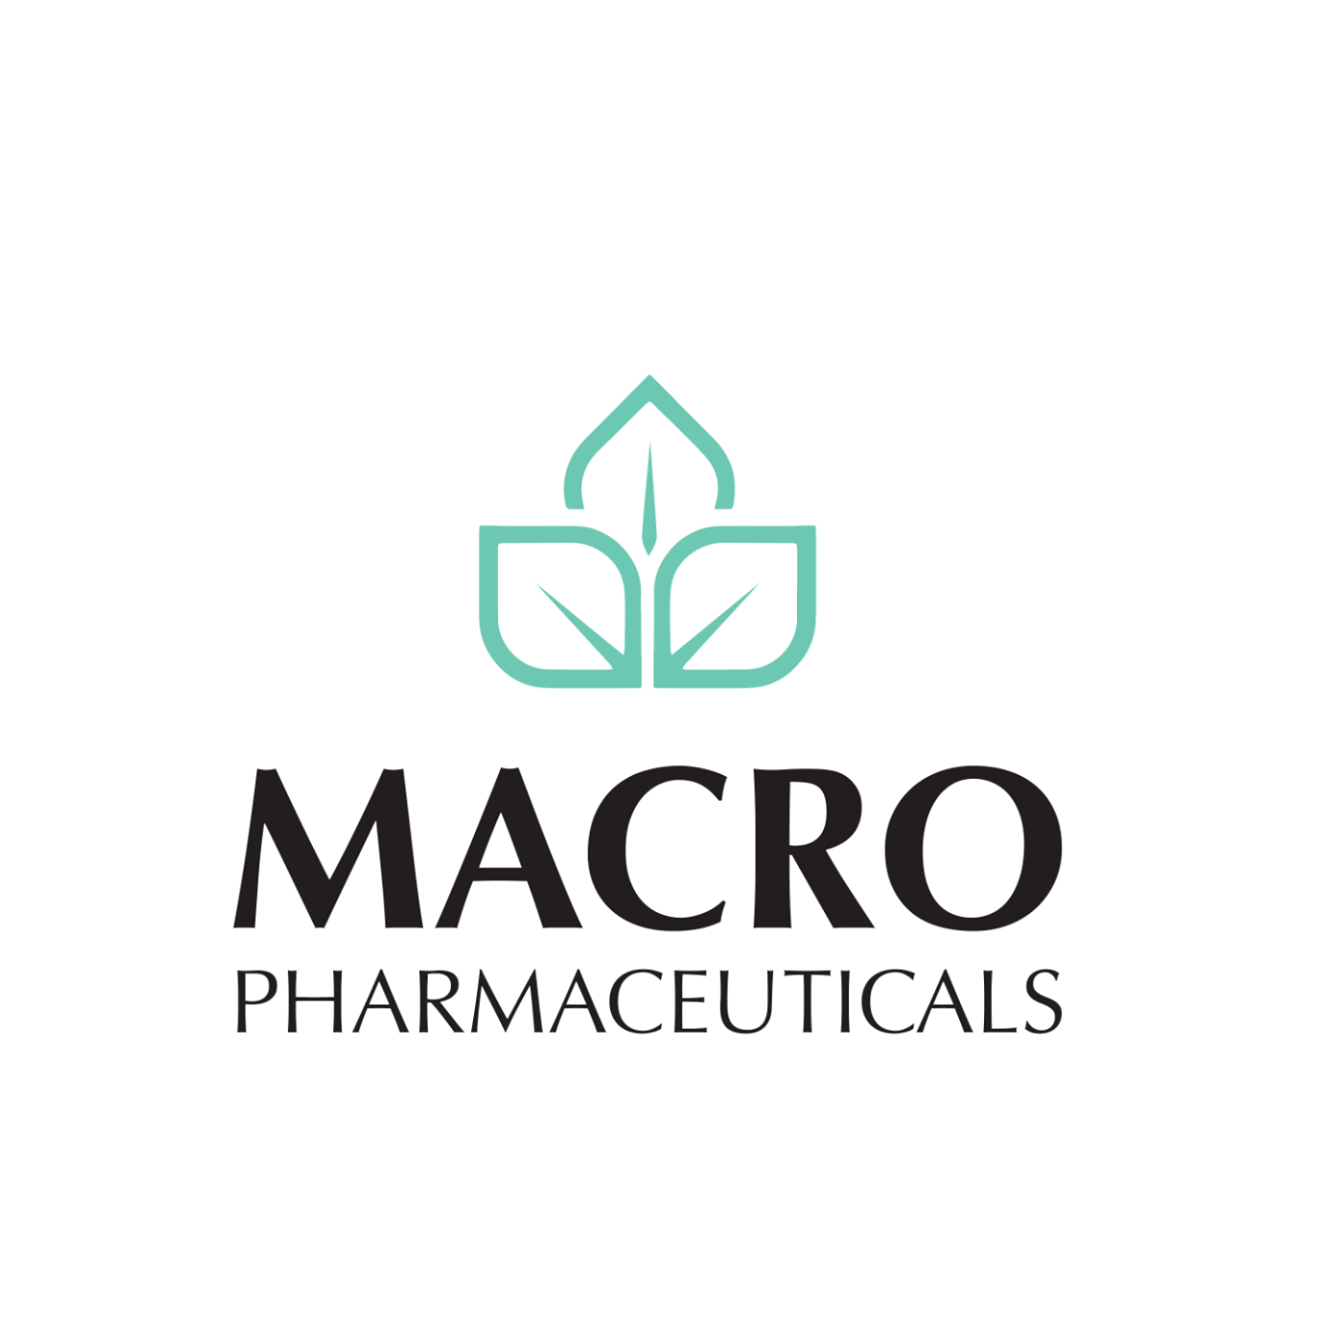 Macro pharmaceticals